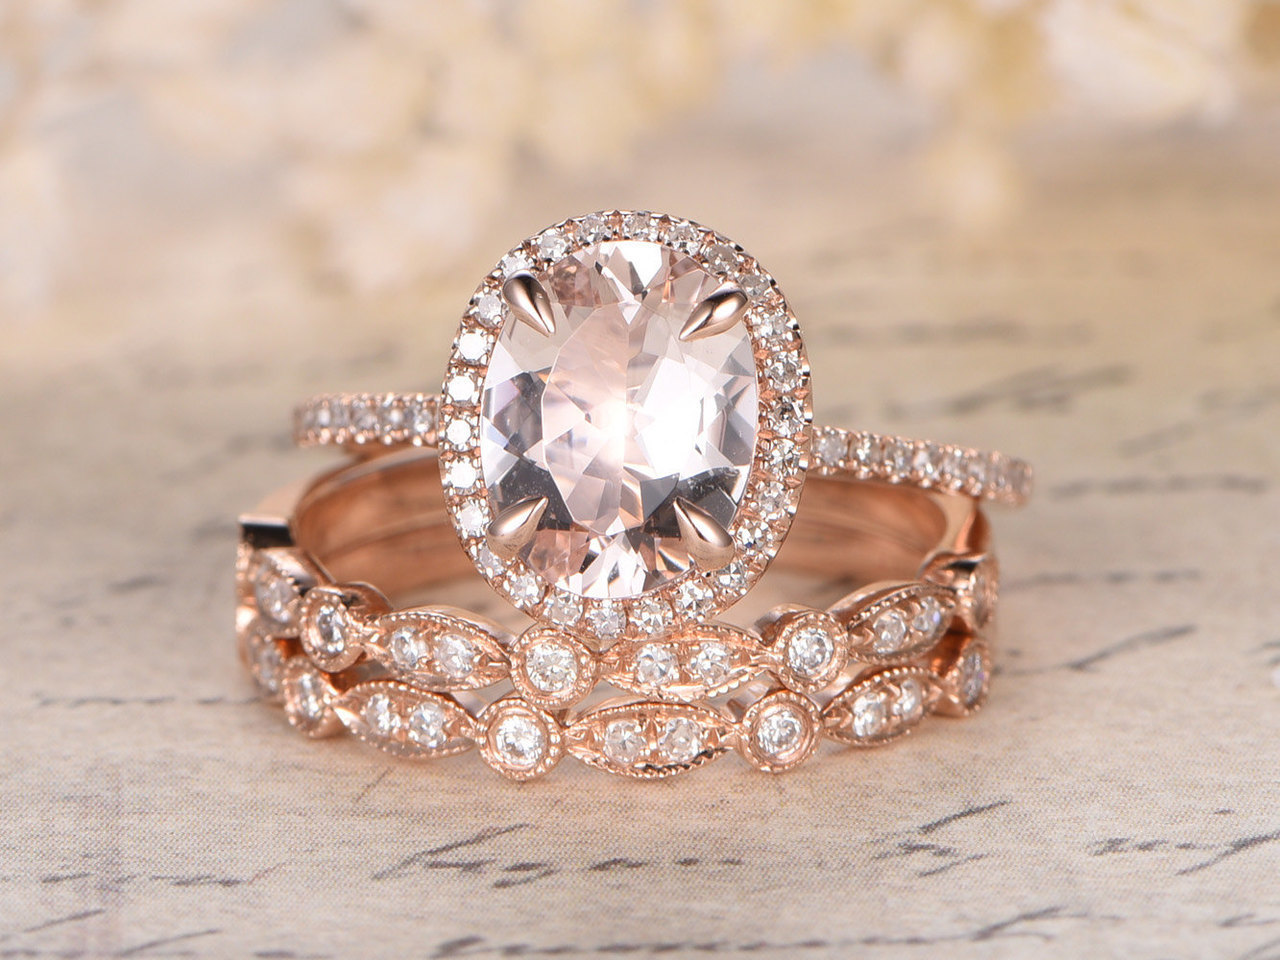 7x9mm Oval Morganite & Diamond Art Deco Wedding Halo Ring Set 14K Rose Gold Over